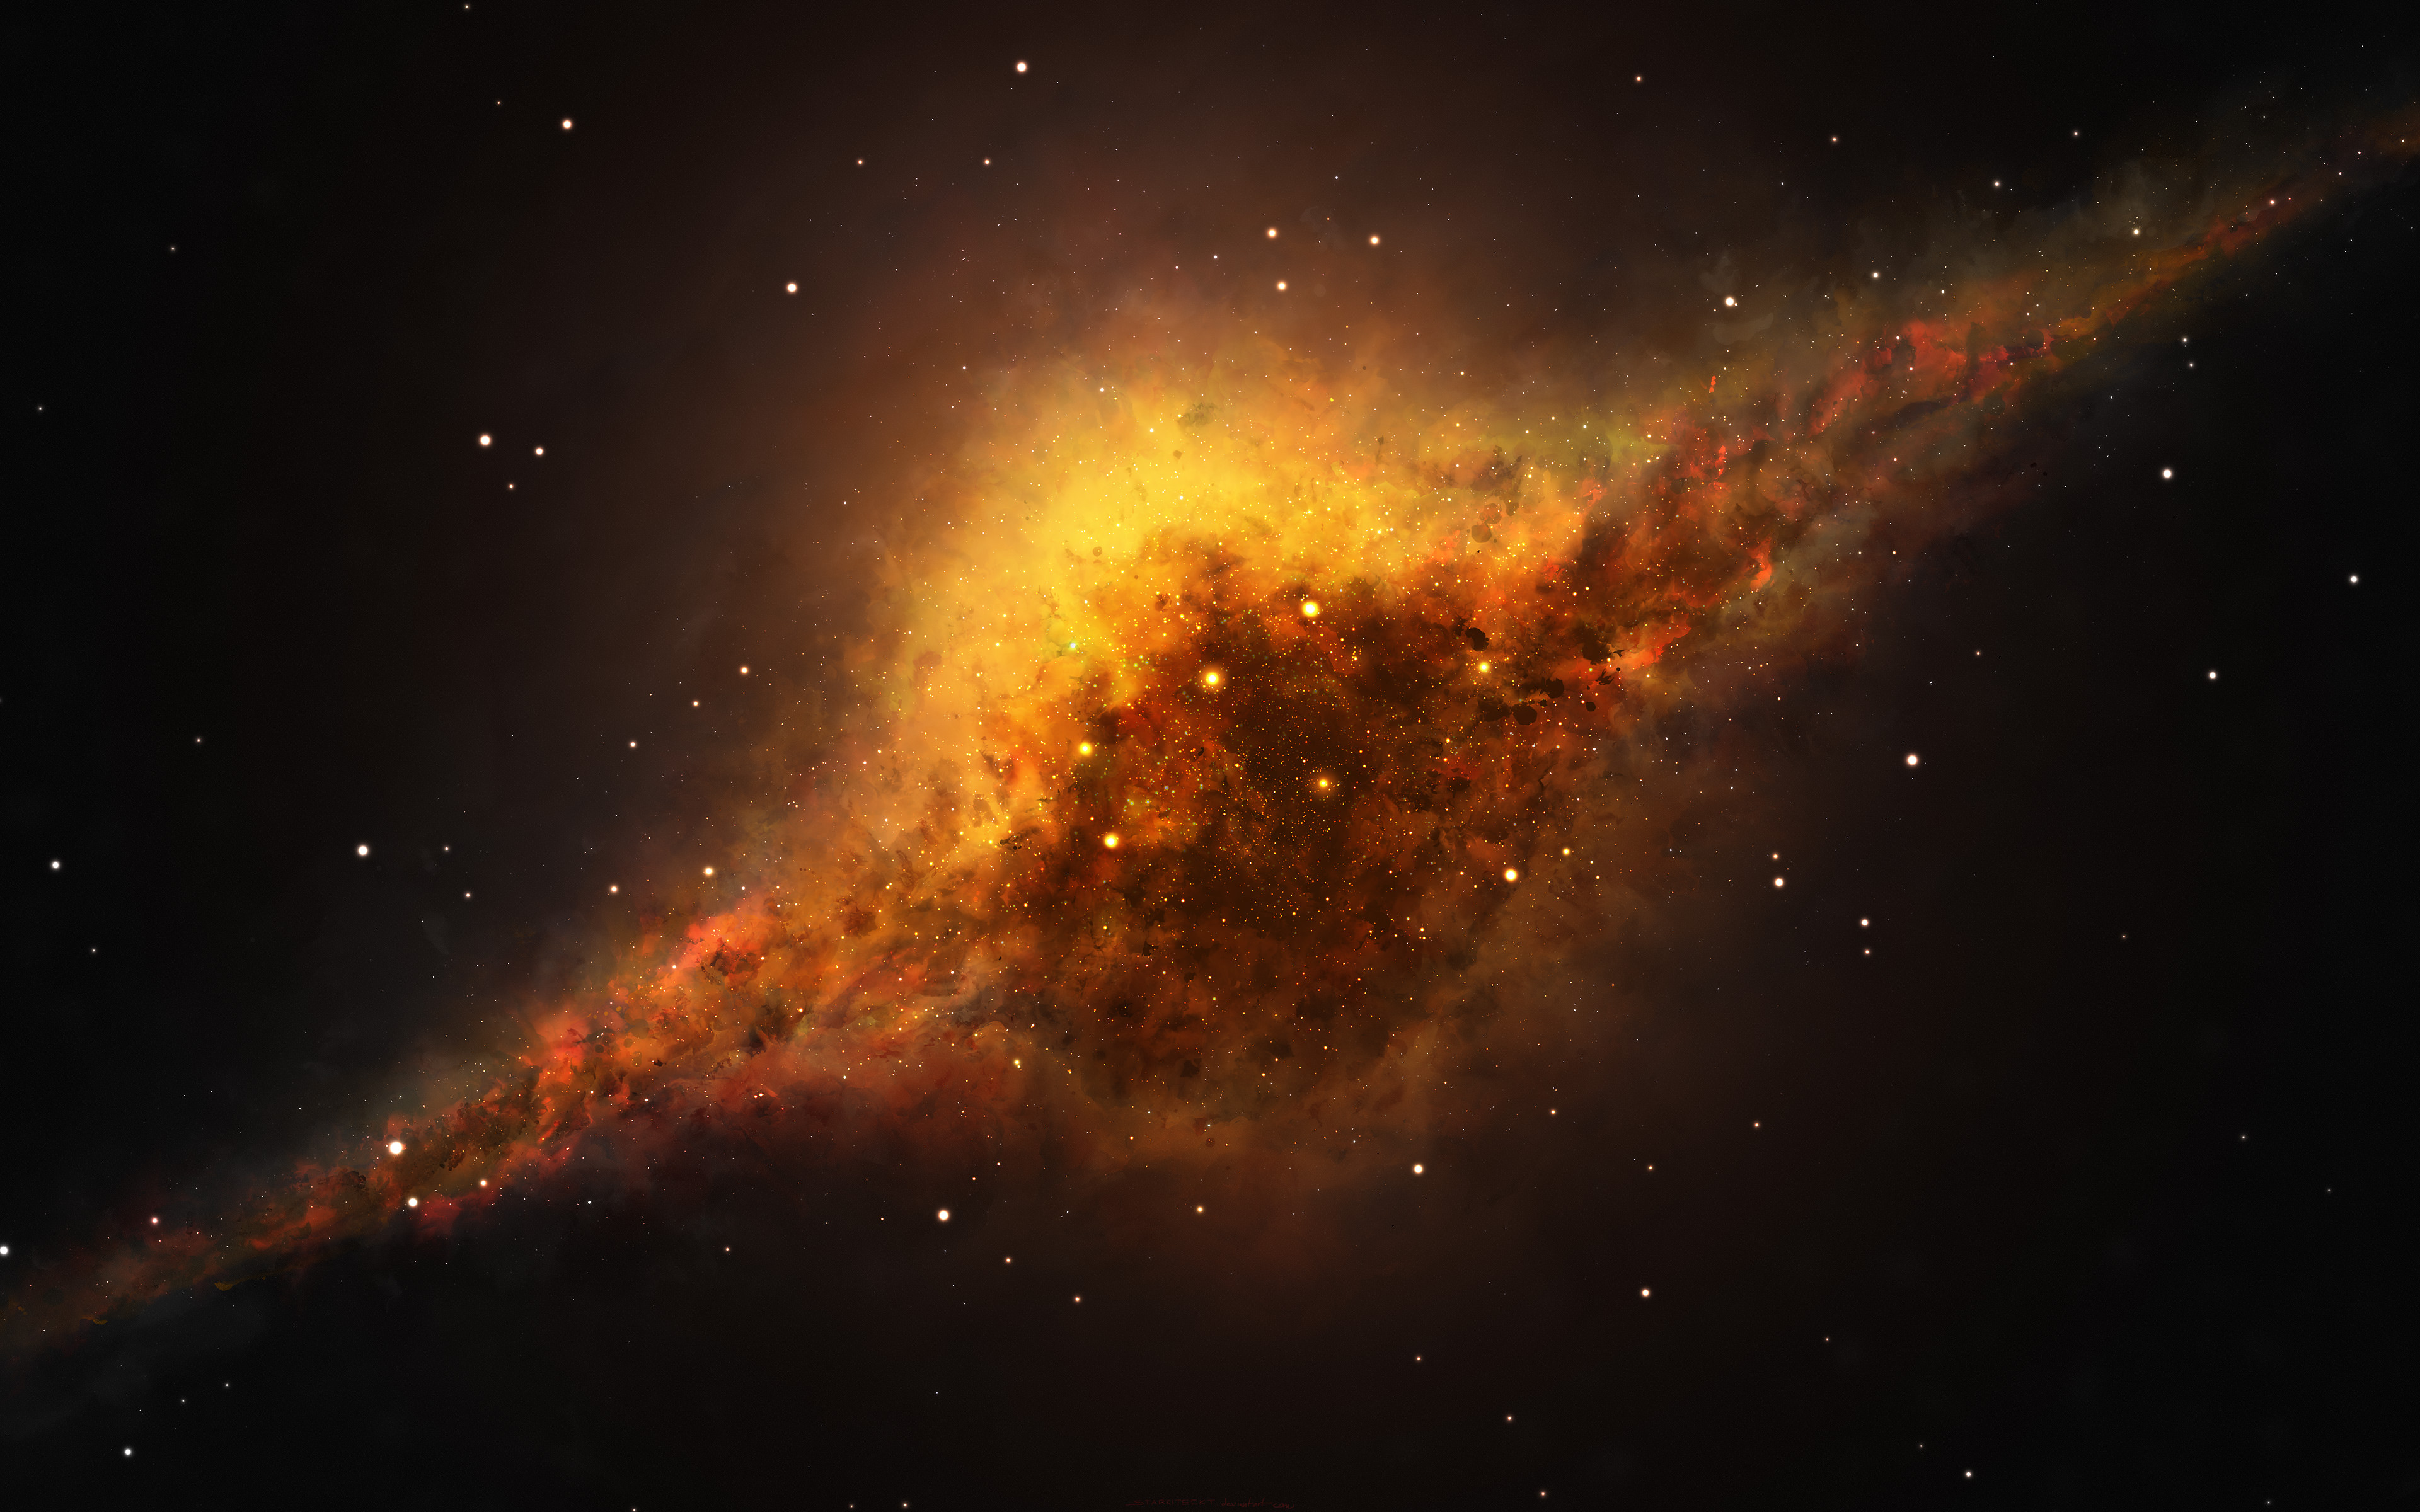 Slice of Fire in Galaxy